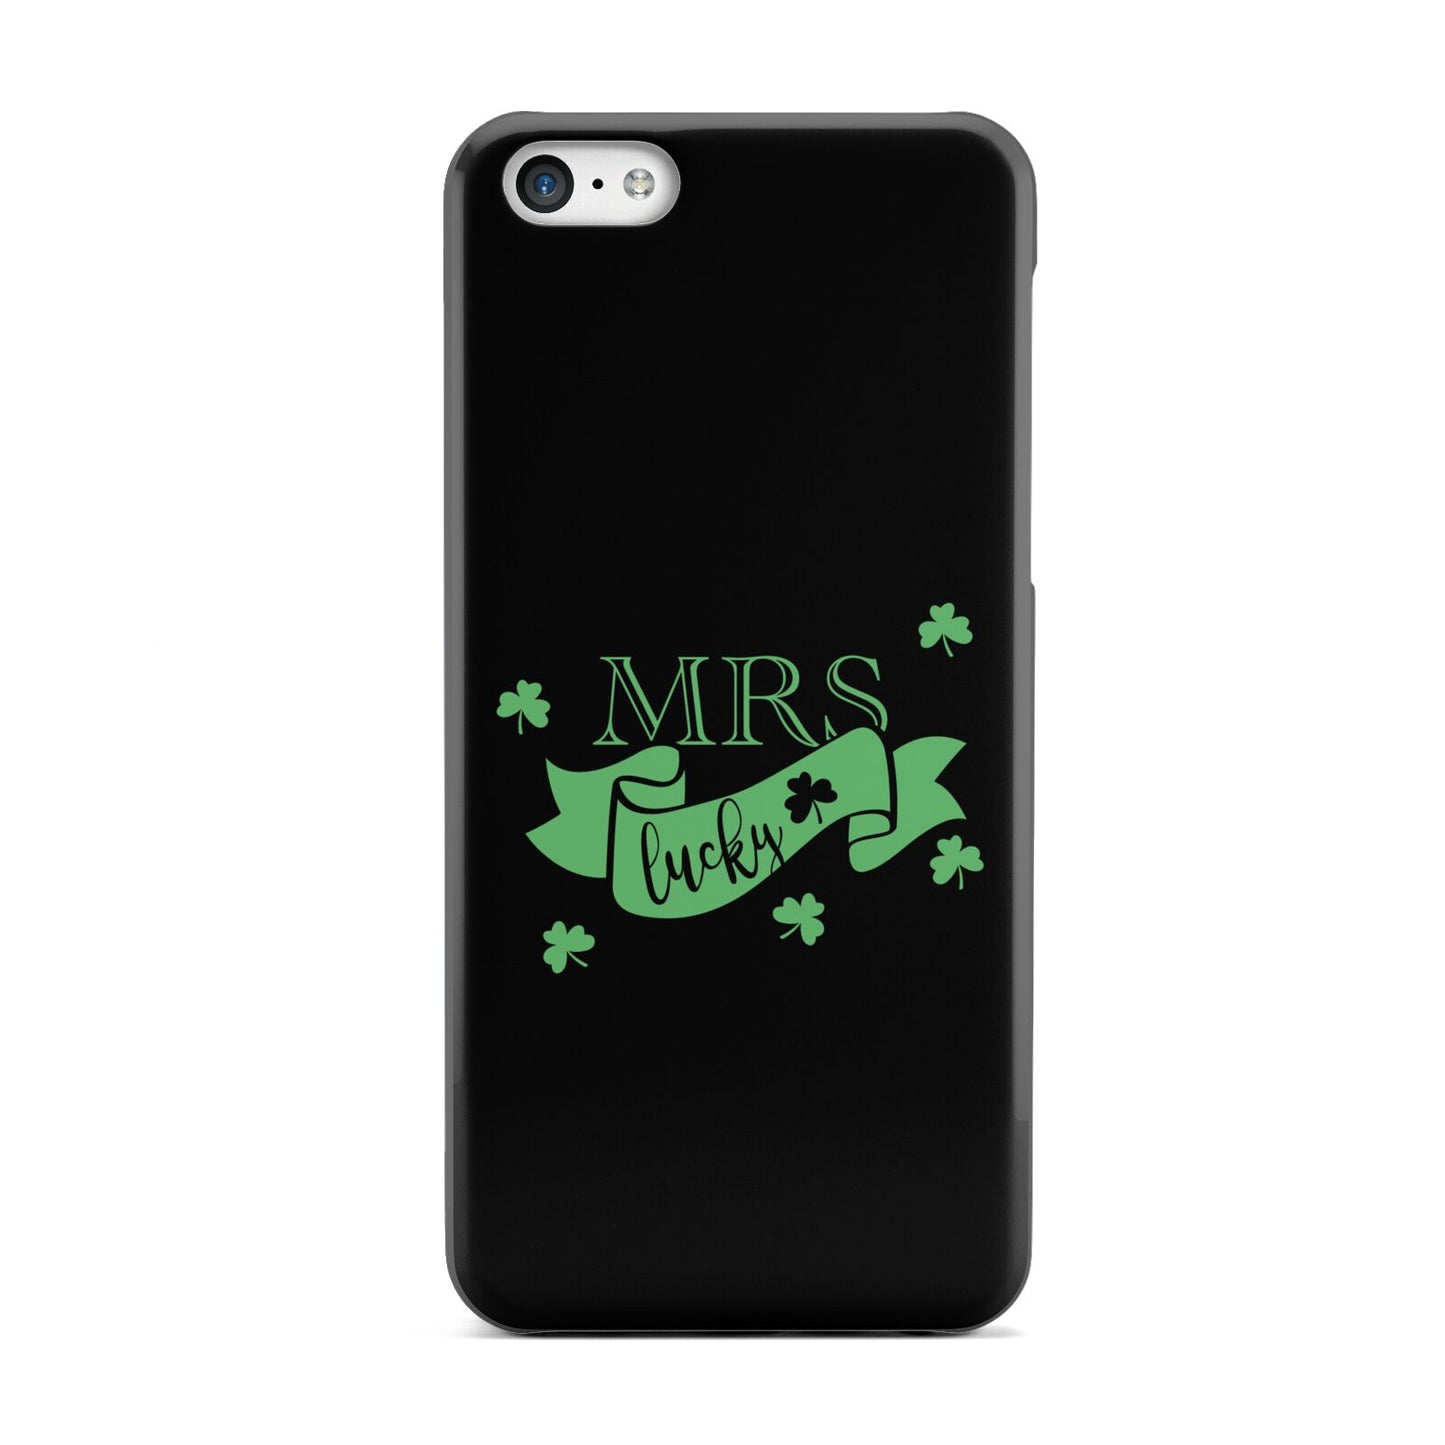 Mrs Lucky Apple iPhone 5c Case